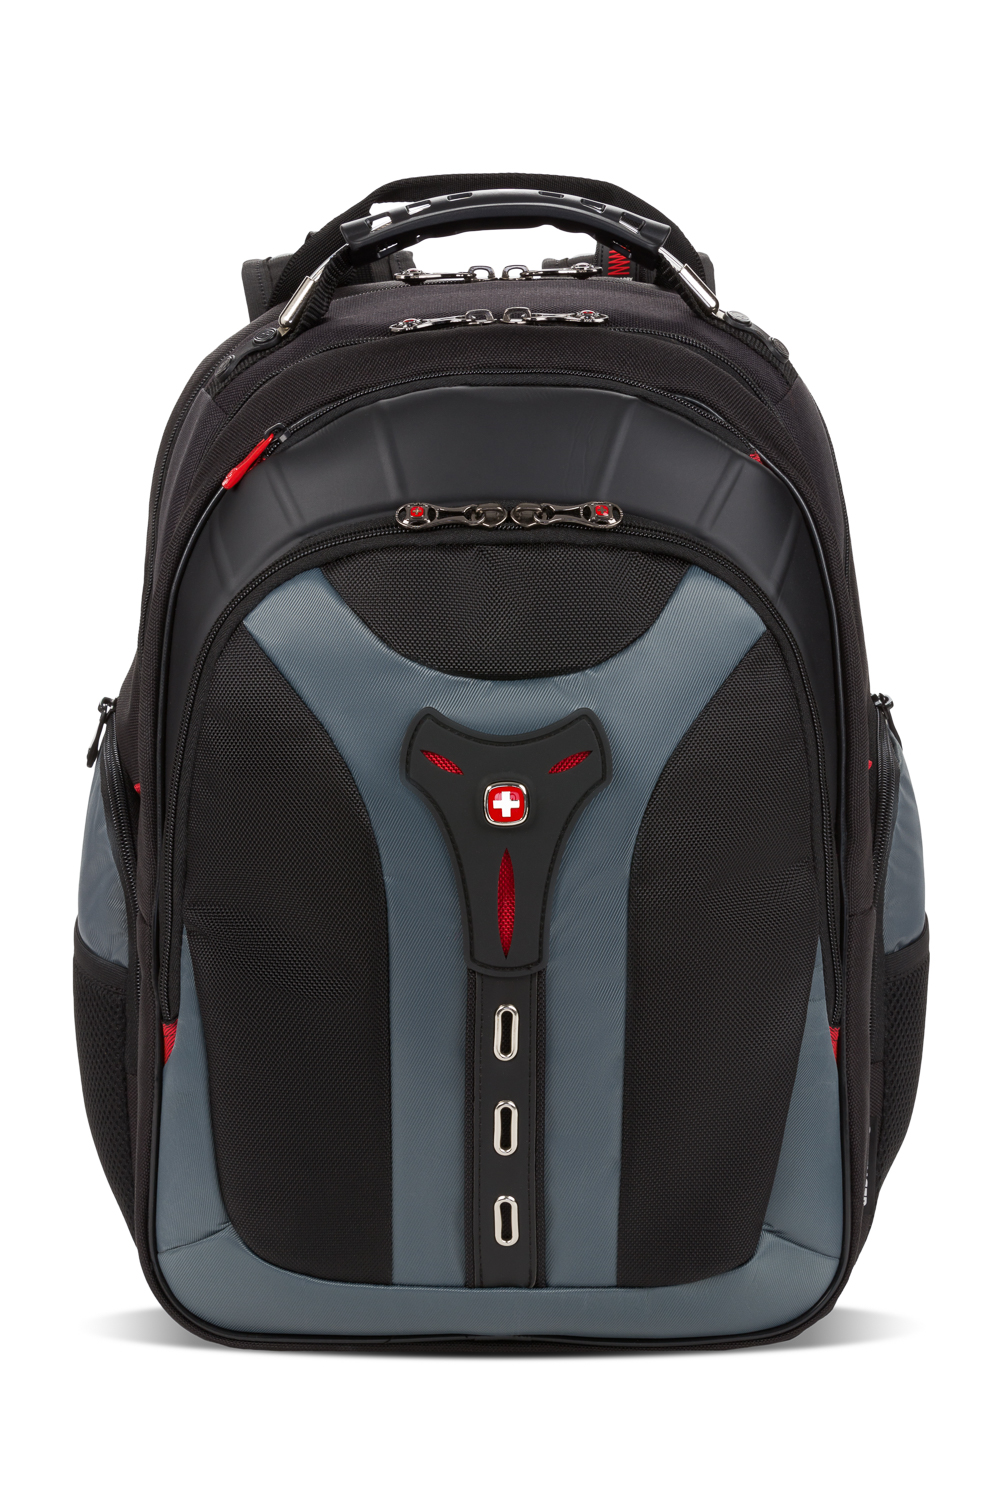 Laptop Computer Backpack Rucksack Bag Case Pouch Wide Mouth Zipper Black 15